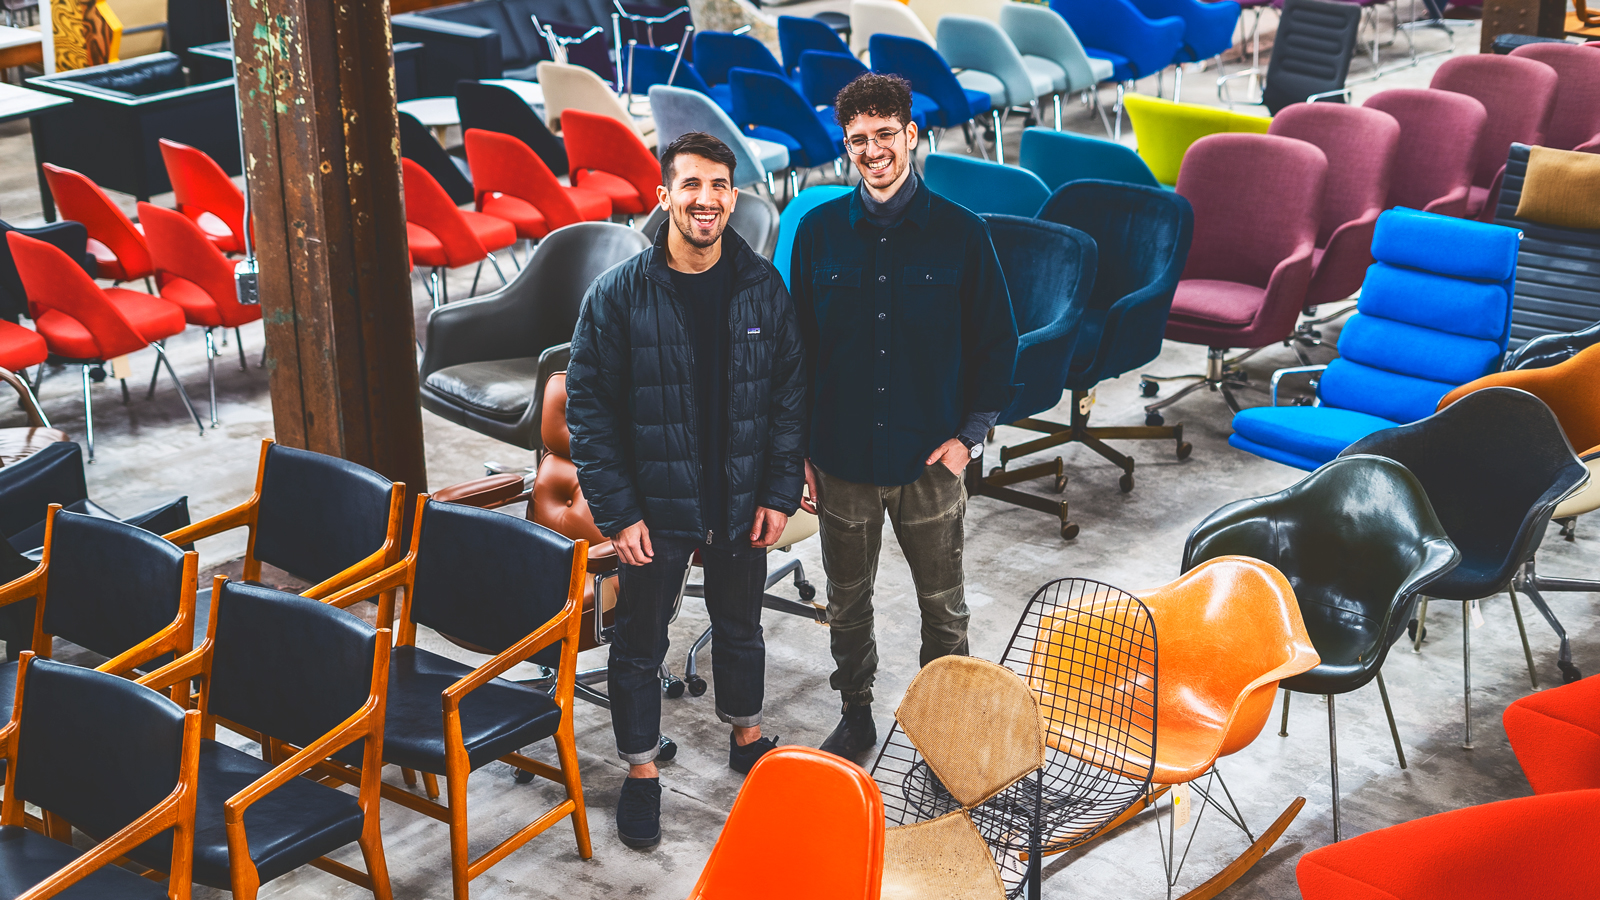 Jeremy Bilotti and David Rosenwasser stand among a warehouse filled with colorful furniture